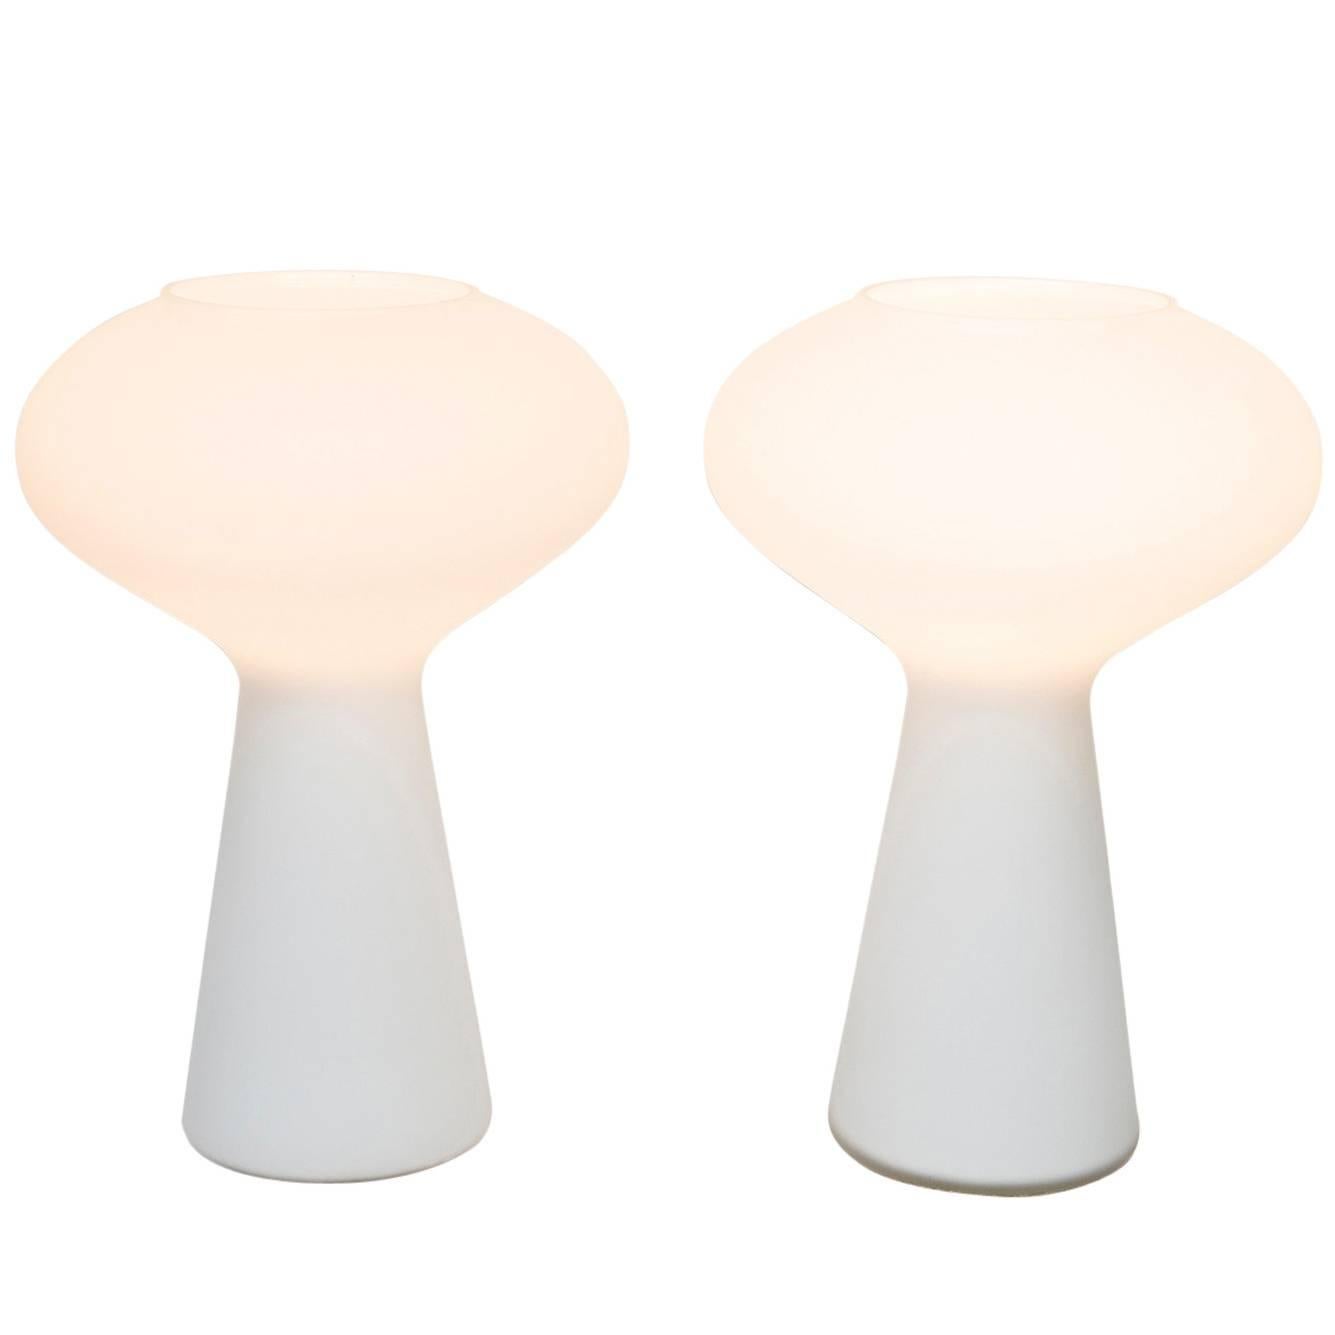 Pair of Mushroom Lamps by Lisa Johansson-Pape